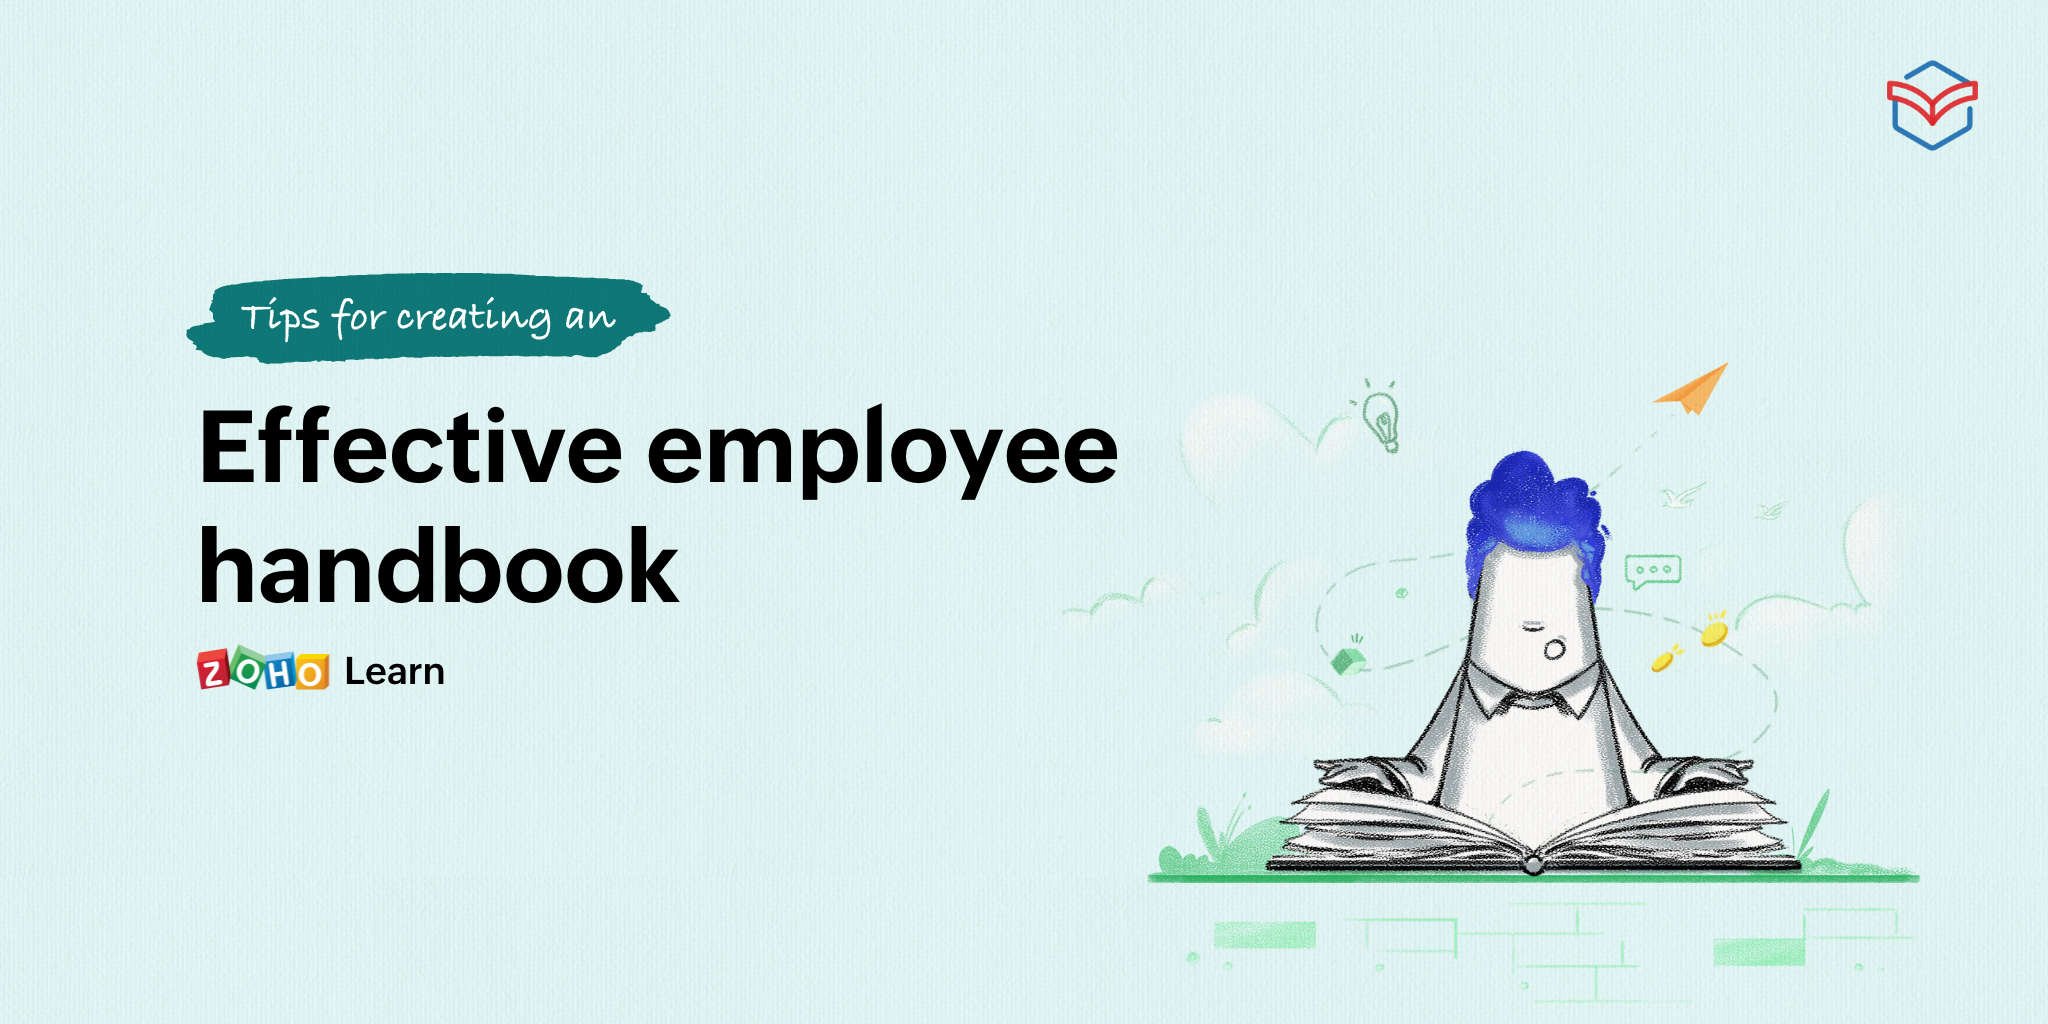 How to create an effective employee handbook